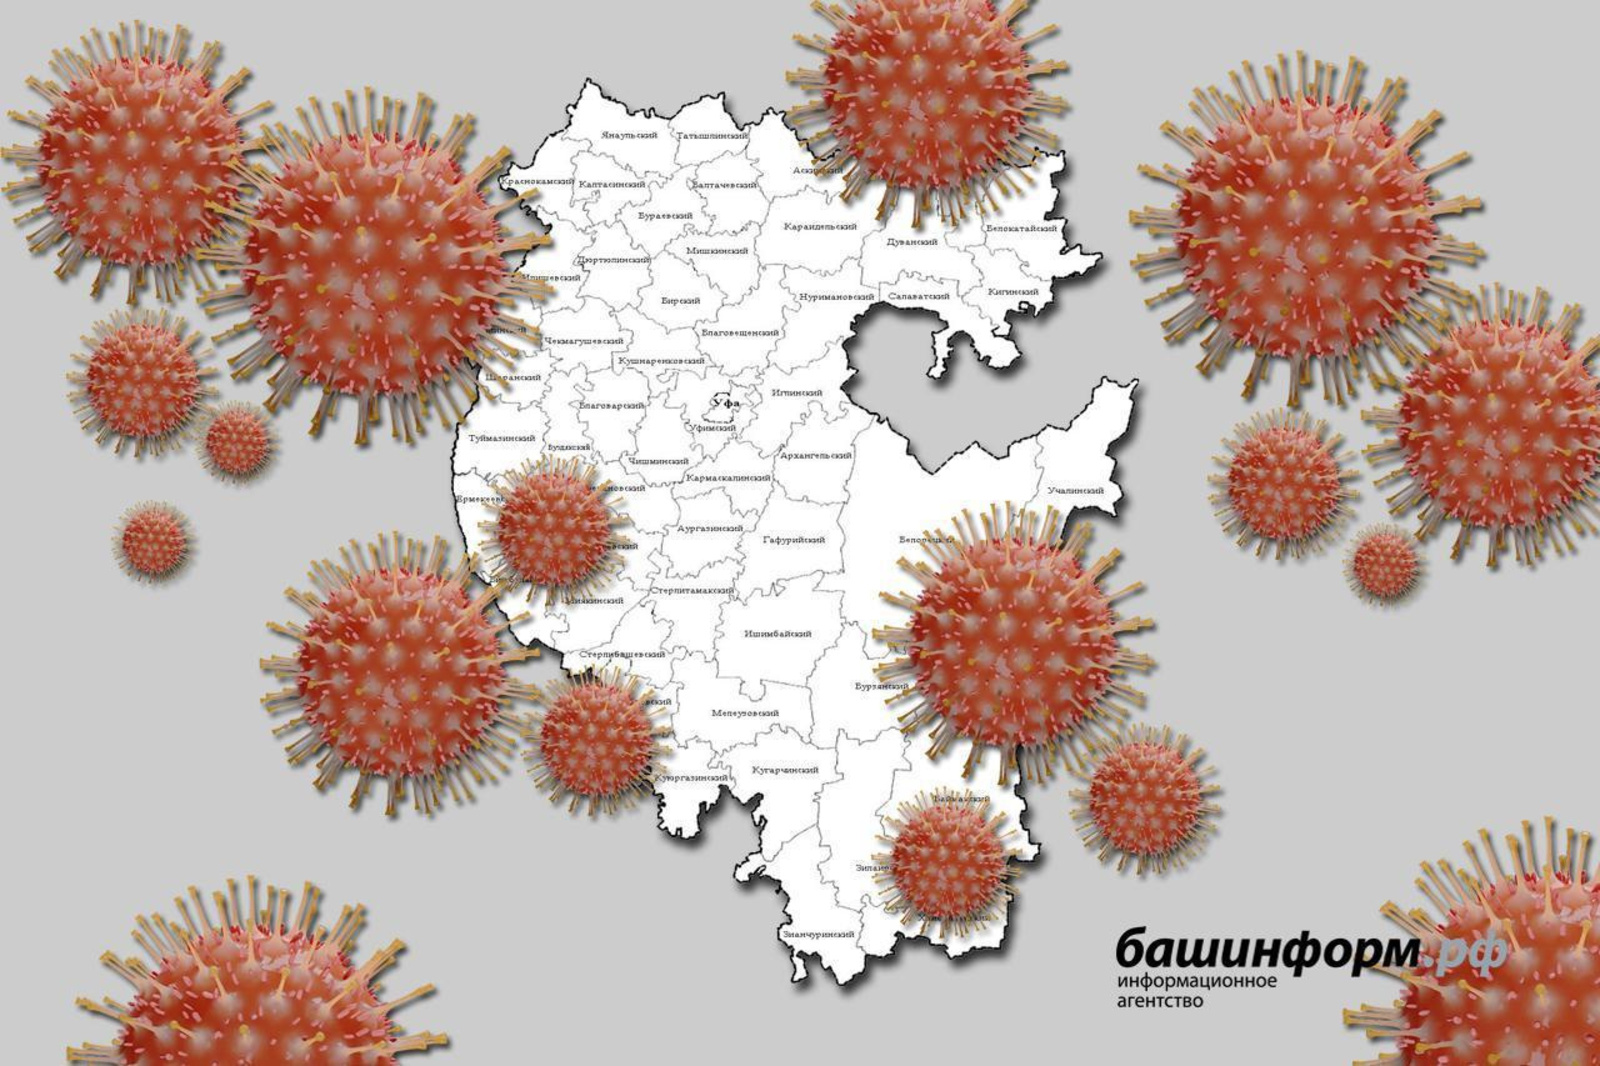 Коронавирус в Башкирии: Рекорд по заболевшим и умершим; утвердили новый список лекарств